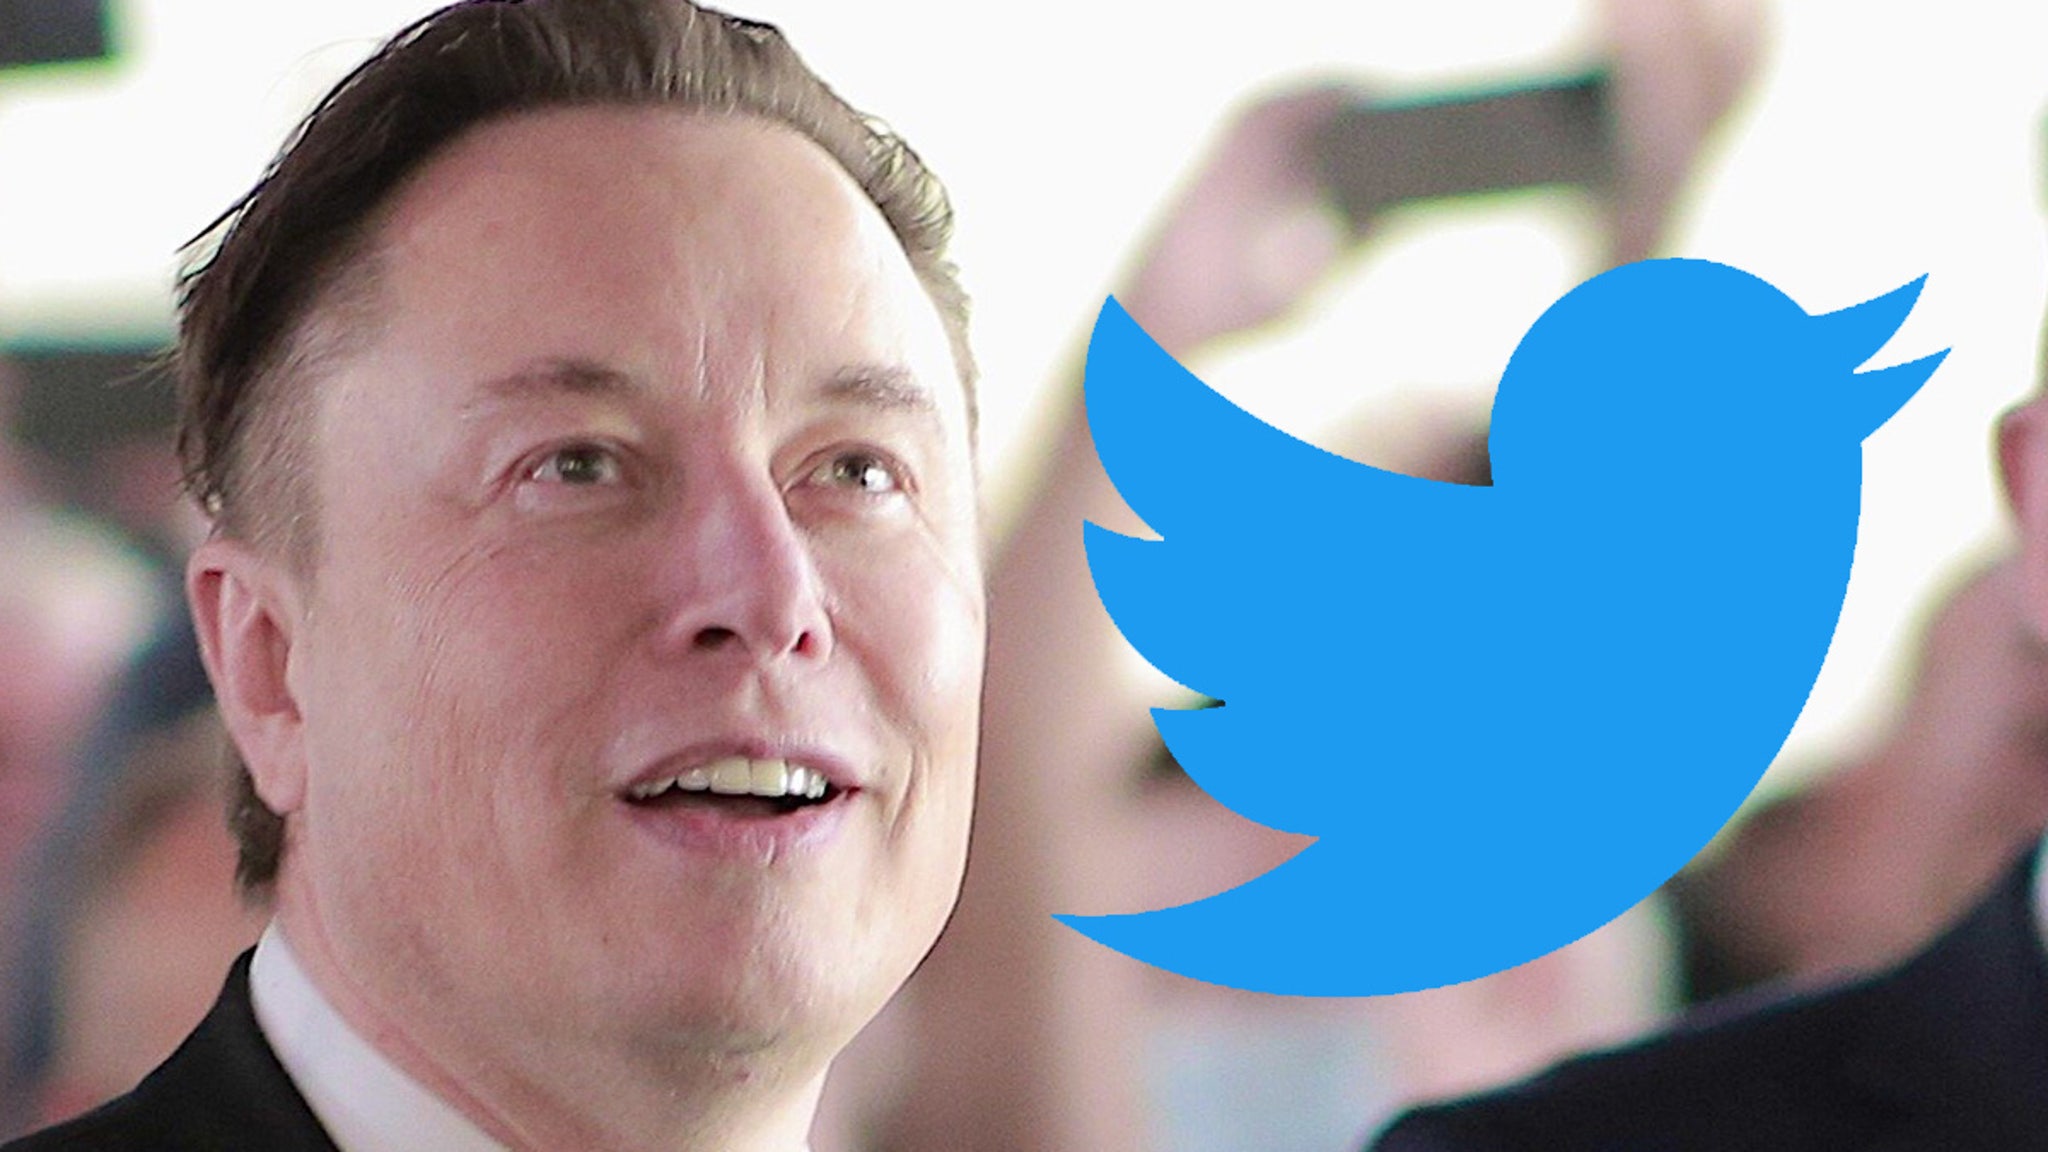 Elon Musk Brought a Sink to Twitter Headquarters as a Bit